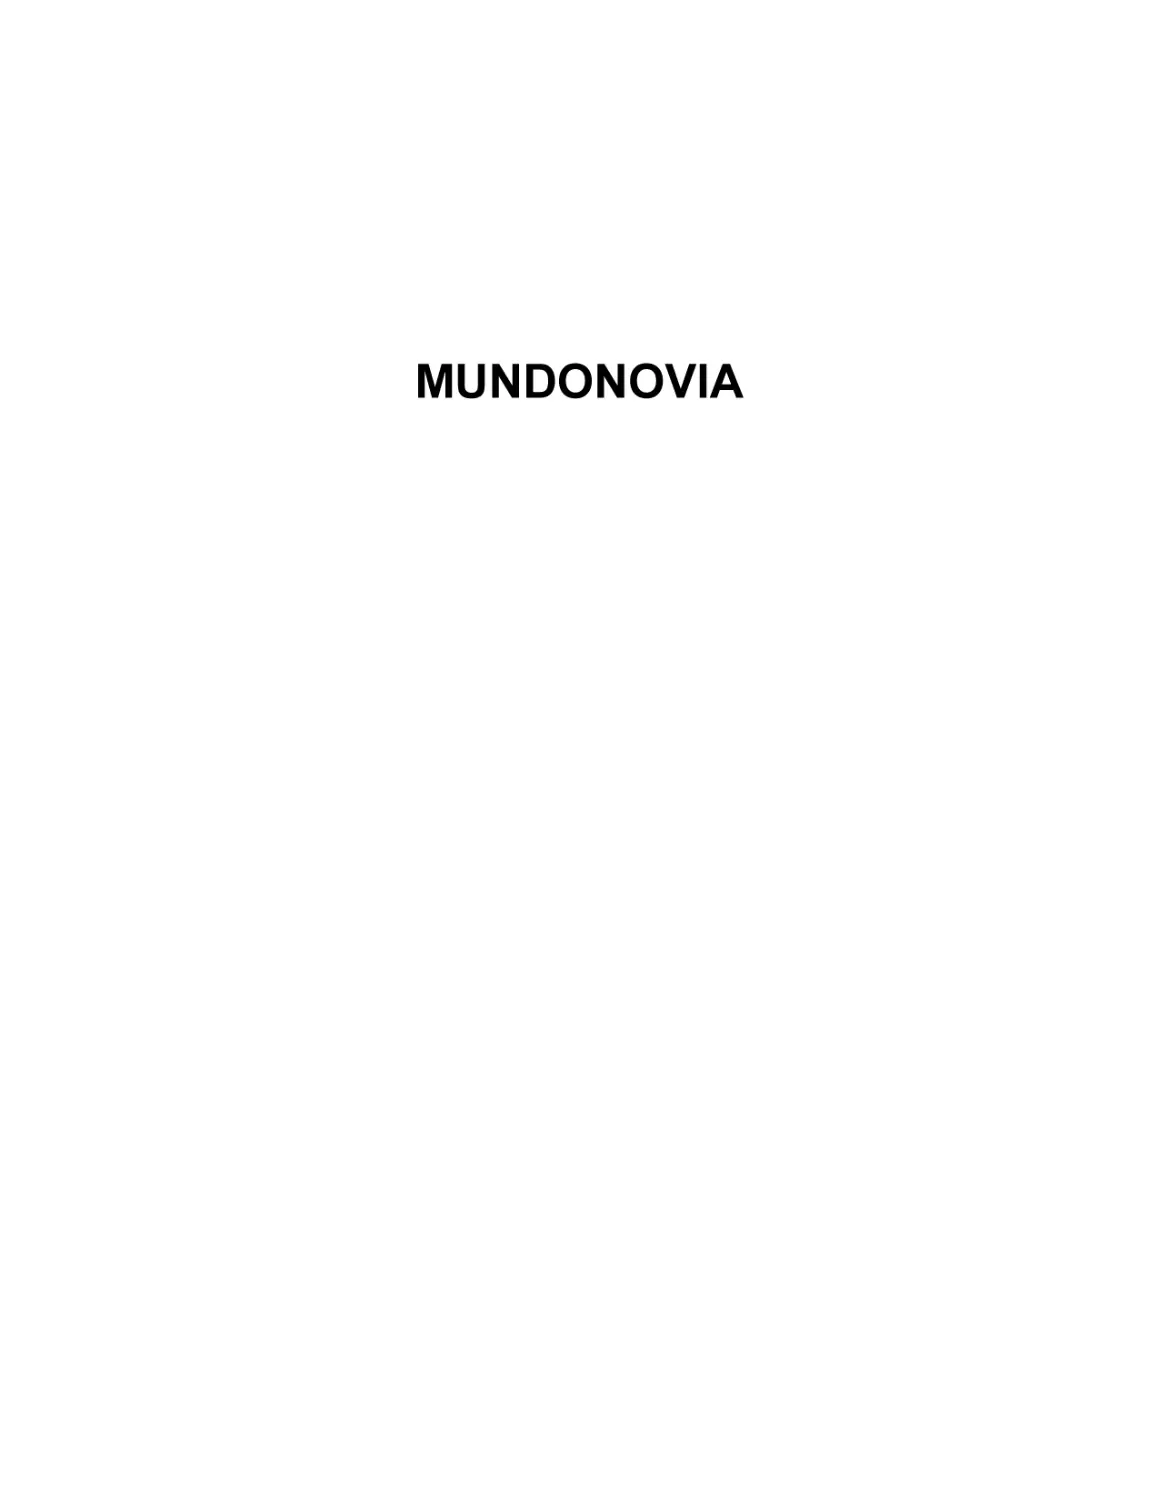 Mundonovia